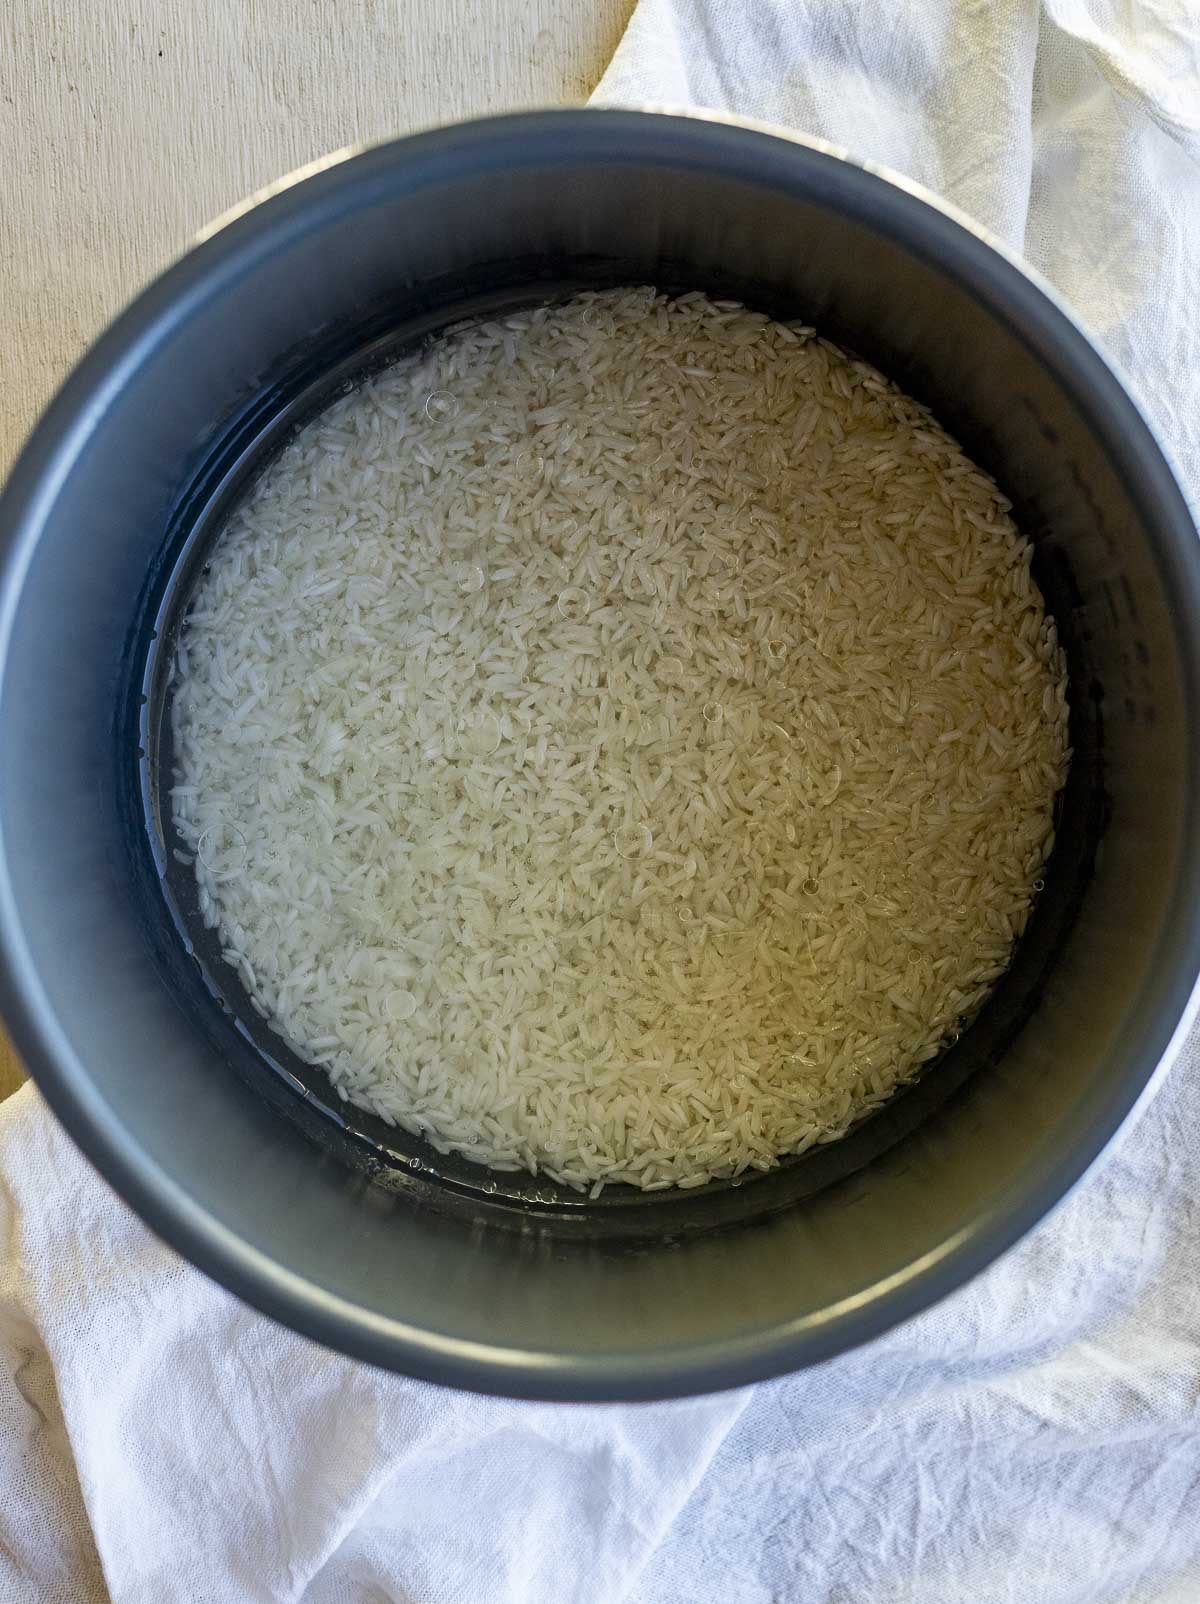 Jasmine rice in water in the Instant Pot insert.